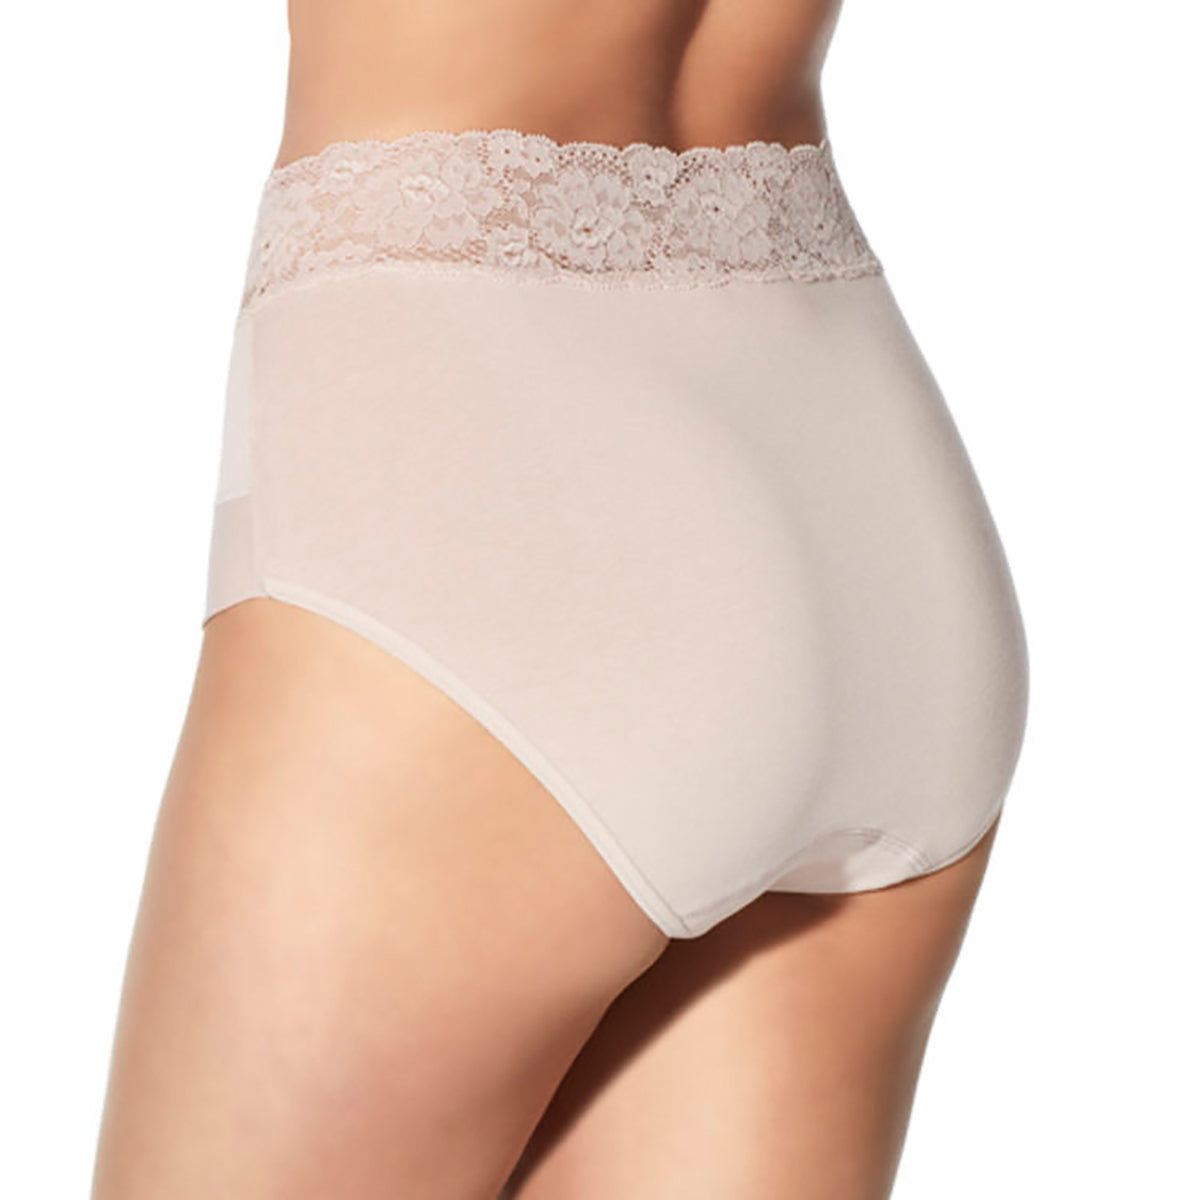 Janira dolce cinture brief in nude dune beige panty cotton underwear spain spanish lingerie canada linea intima